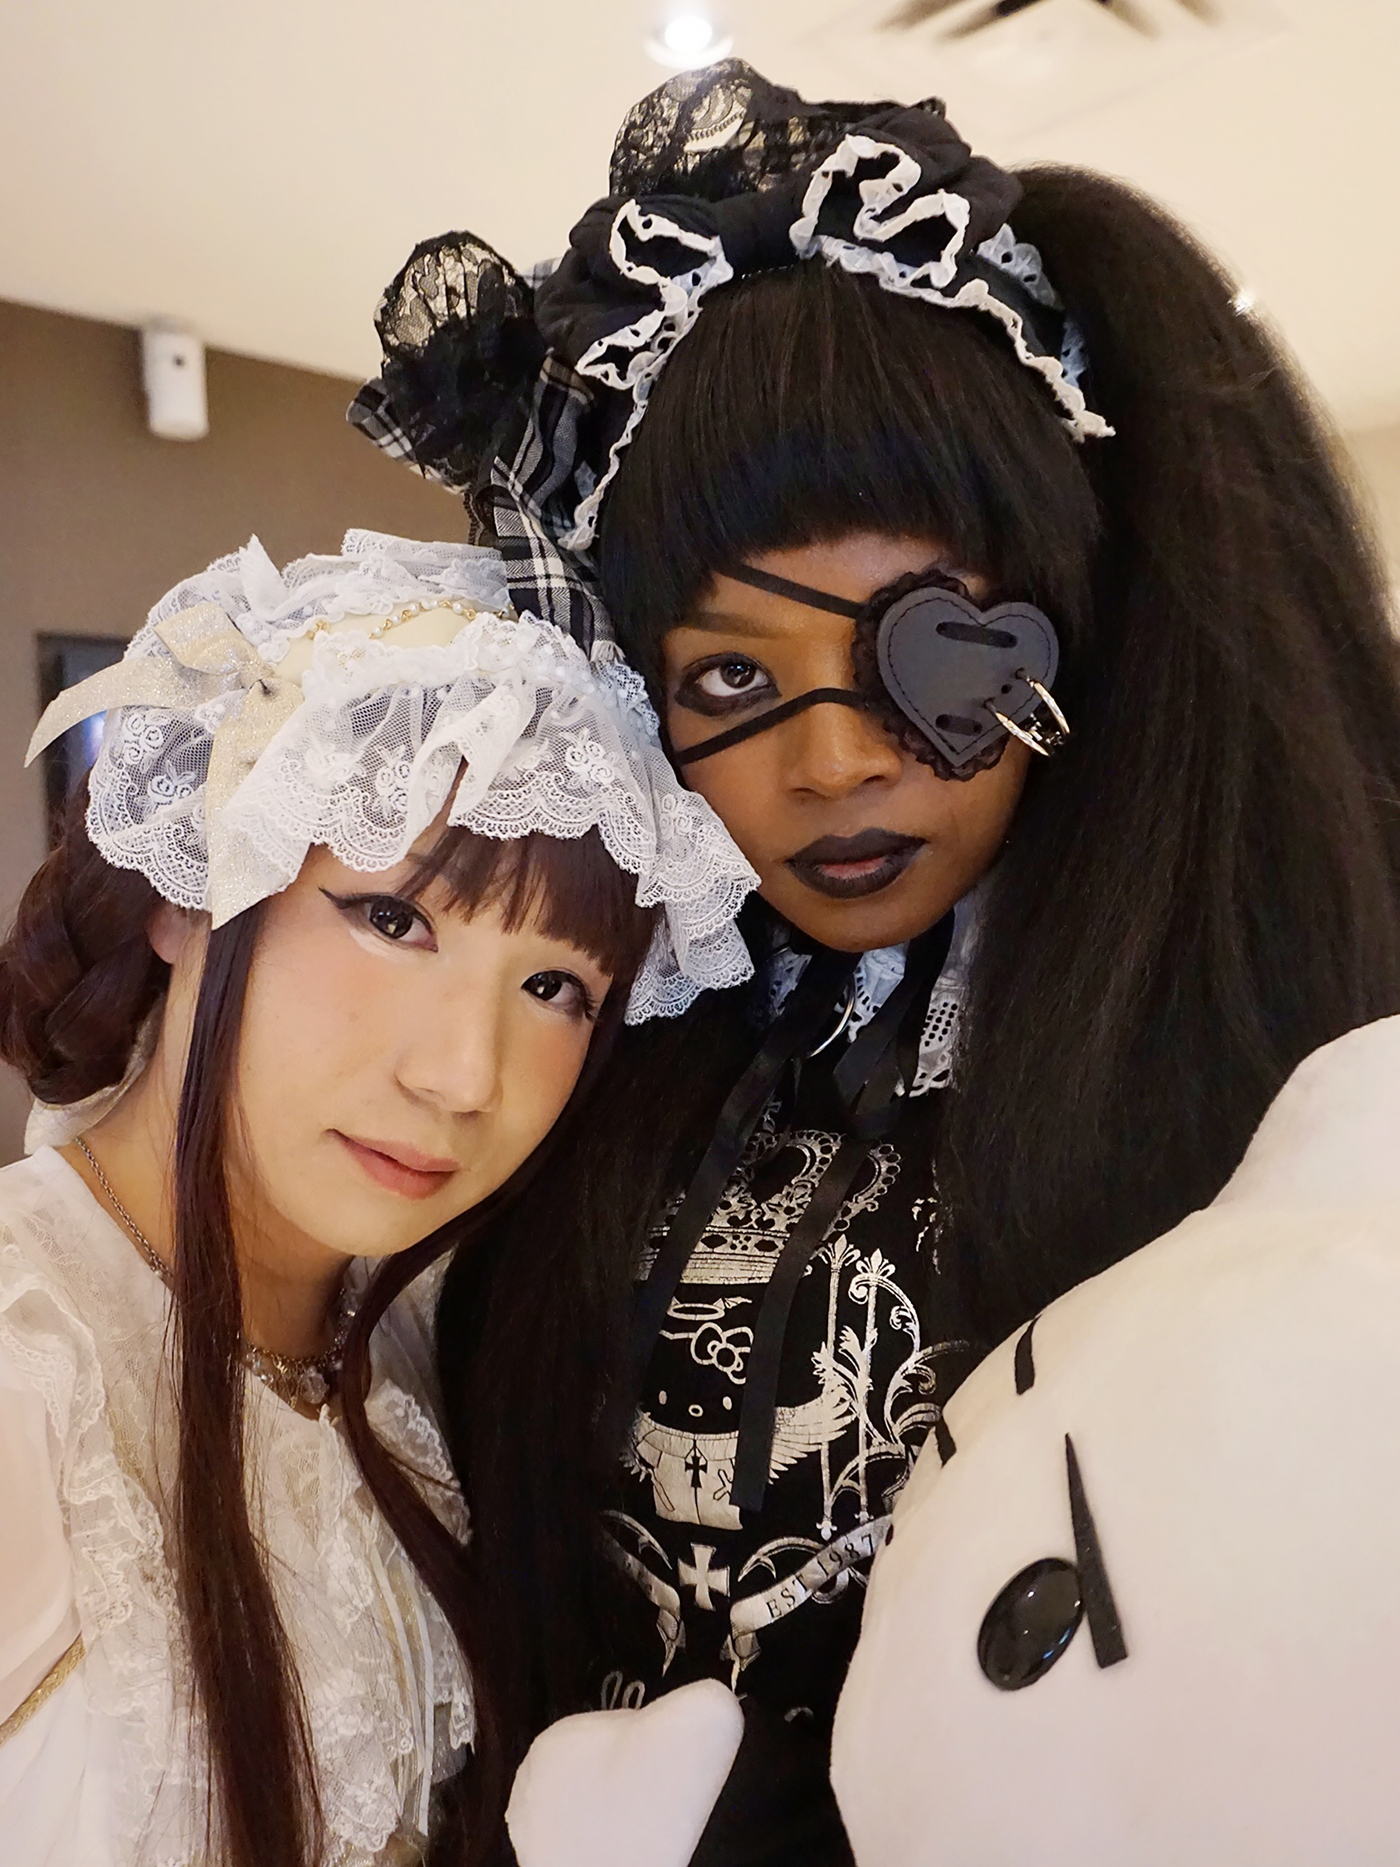 Asian Porn Japanese Dark Gothic - Maiden's Armorâ€: Global Gothic Lolita Fashion Communities and Technologies  of Girly Counteridentity | Theatre Survey | Cambridge Core